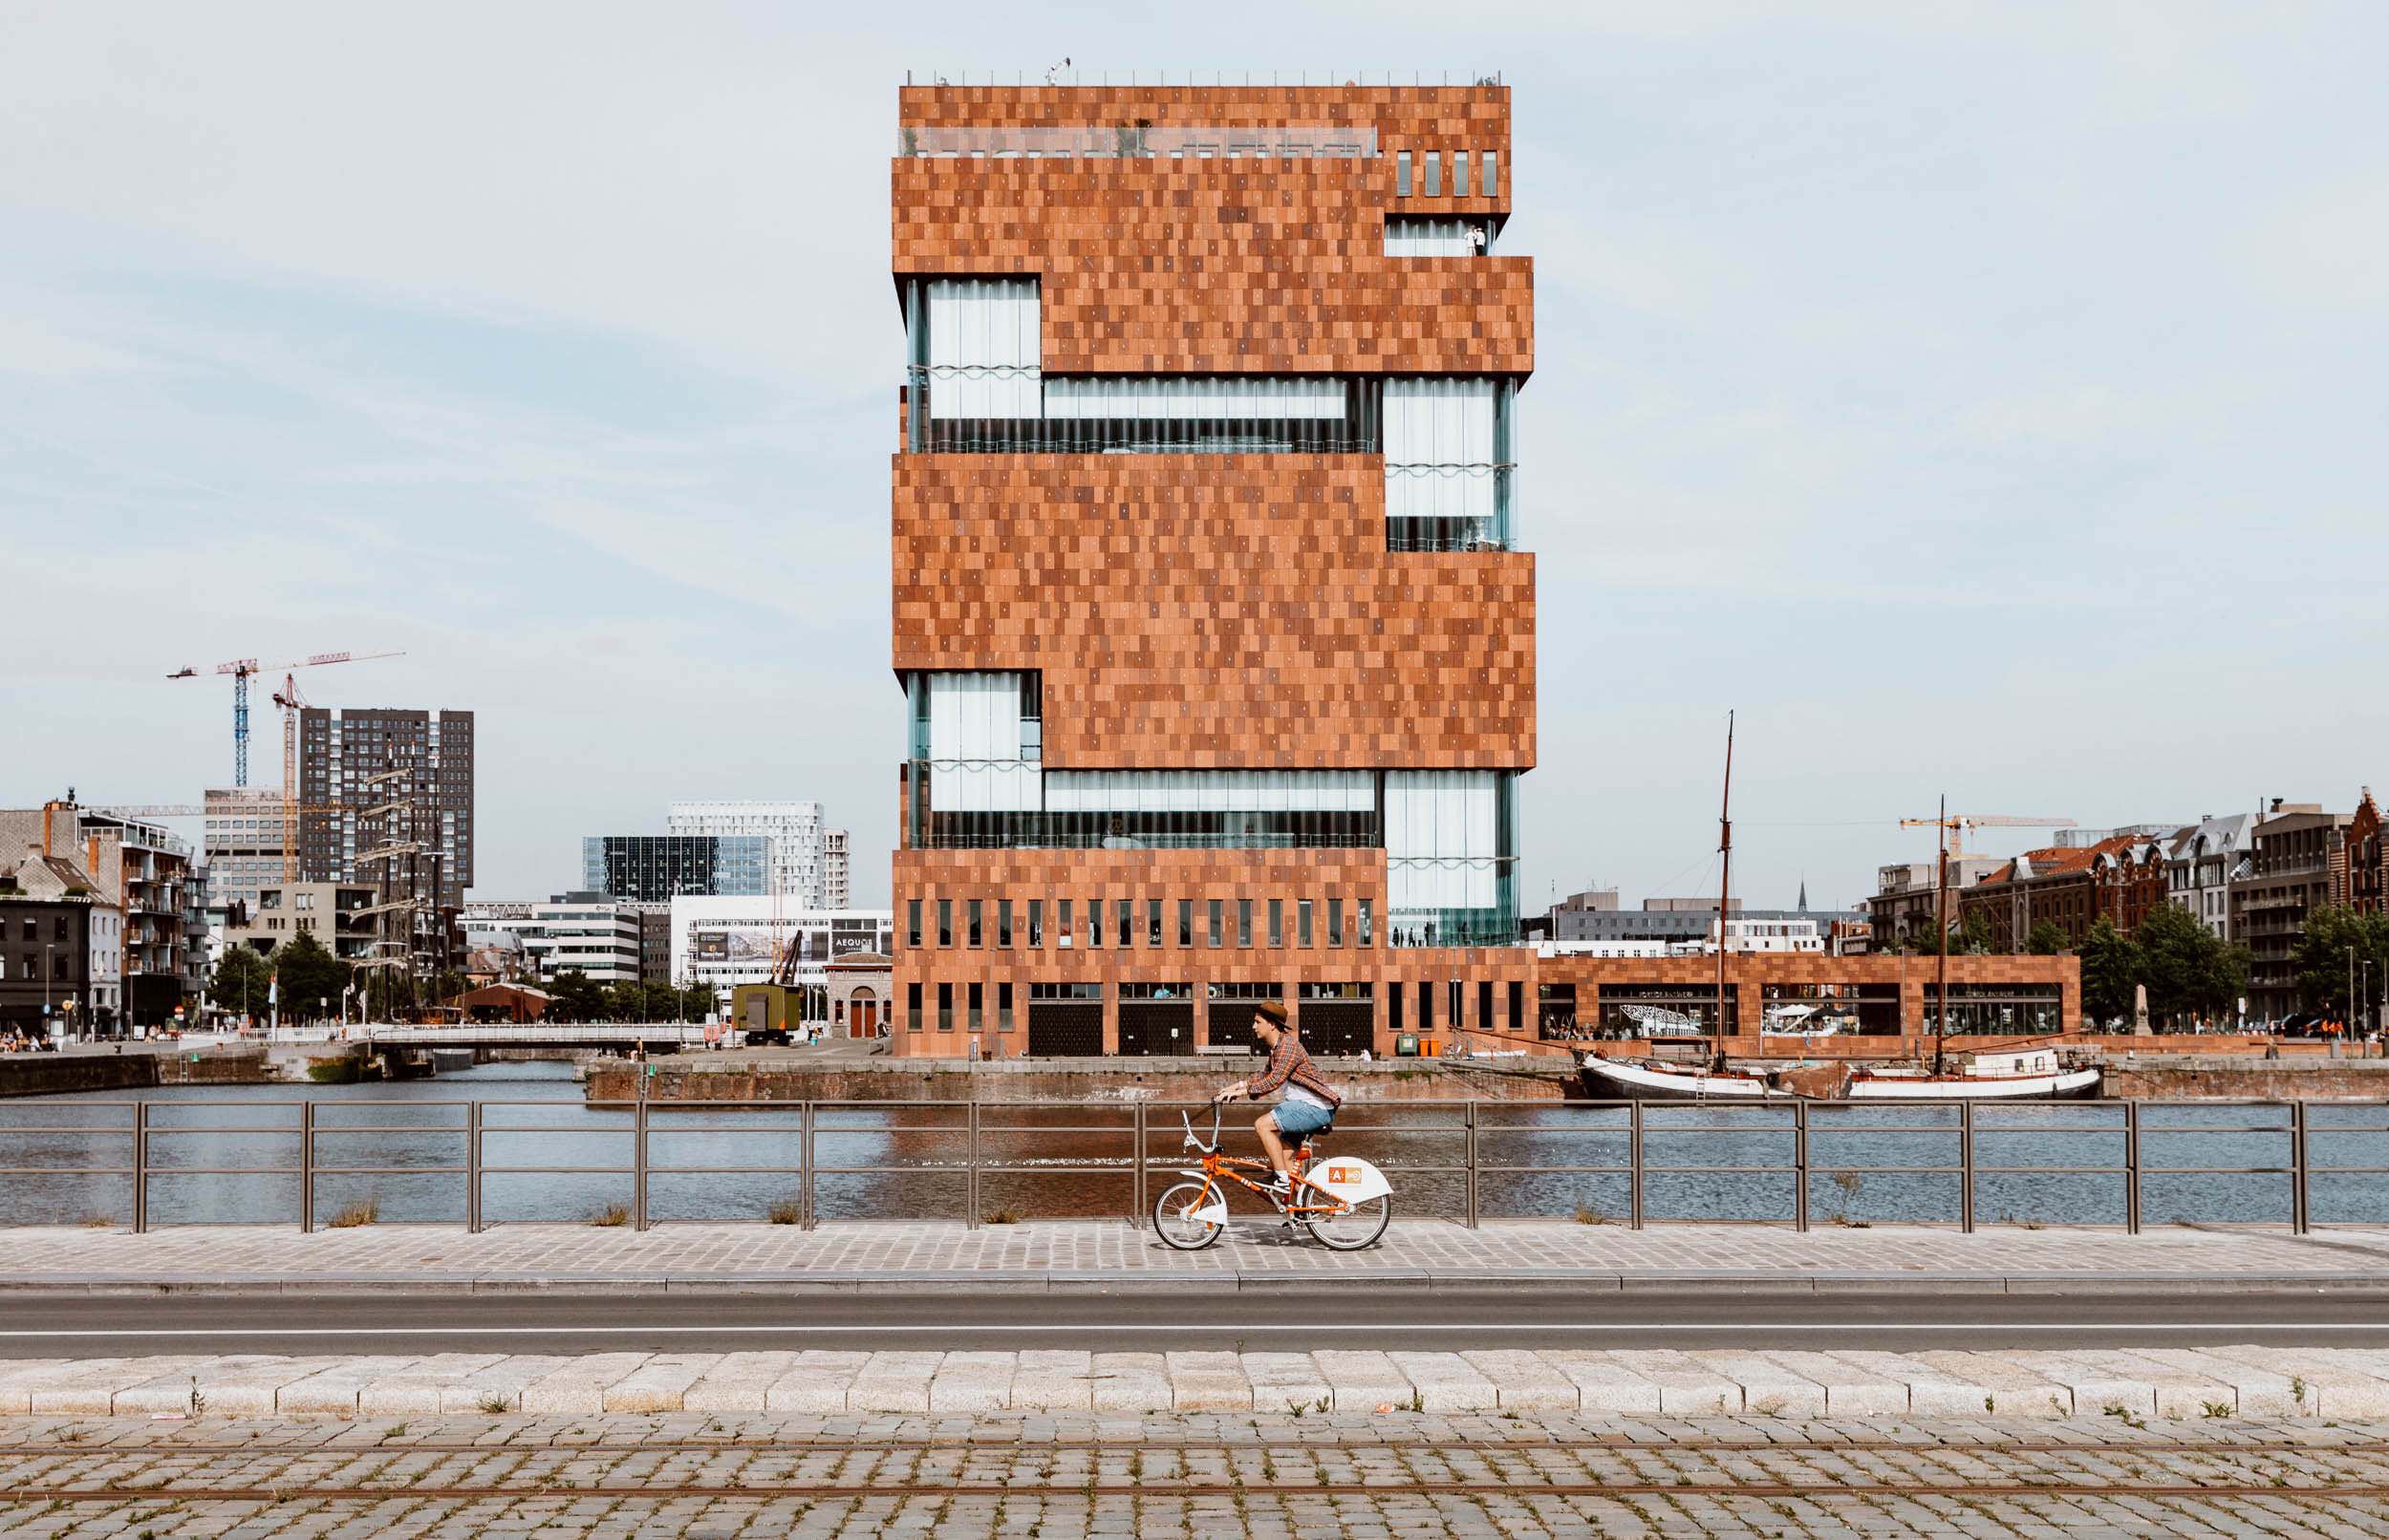 Visit Antwerpen digitaliseert met Boondoggle en Hotel Hungaria